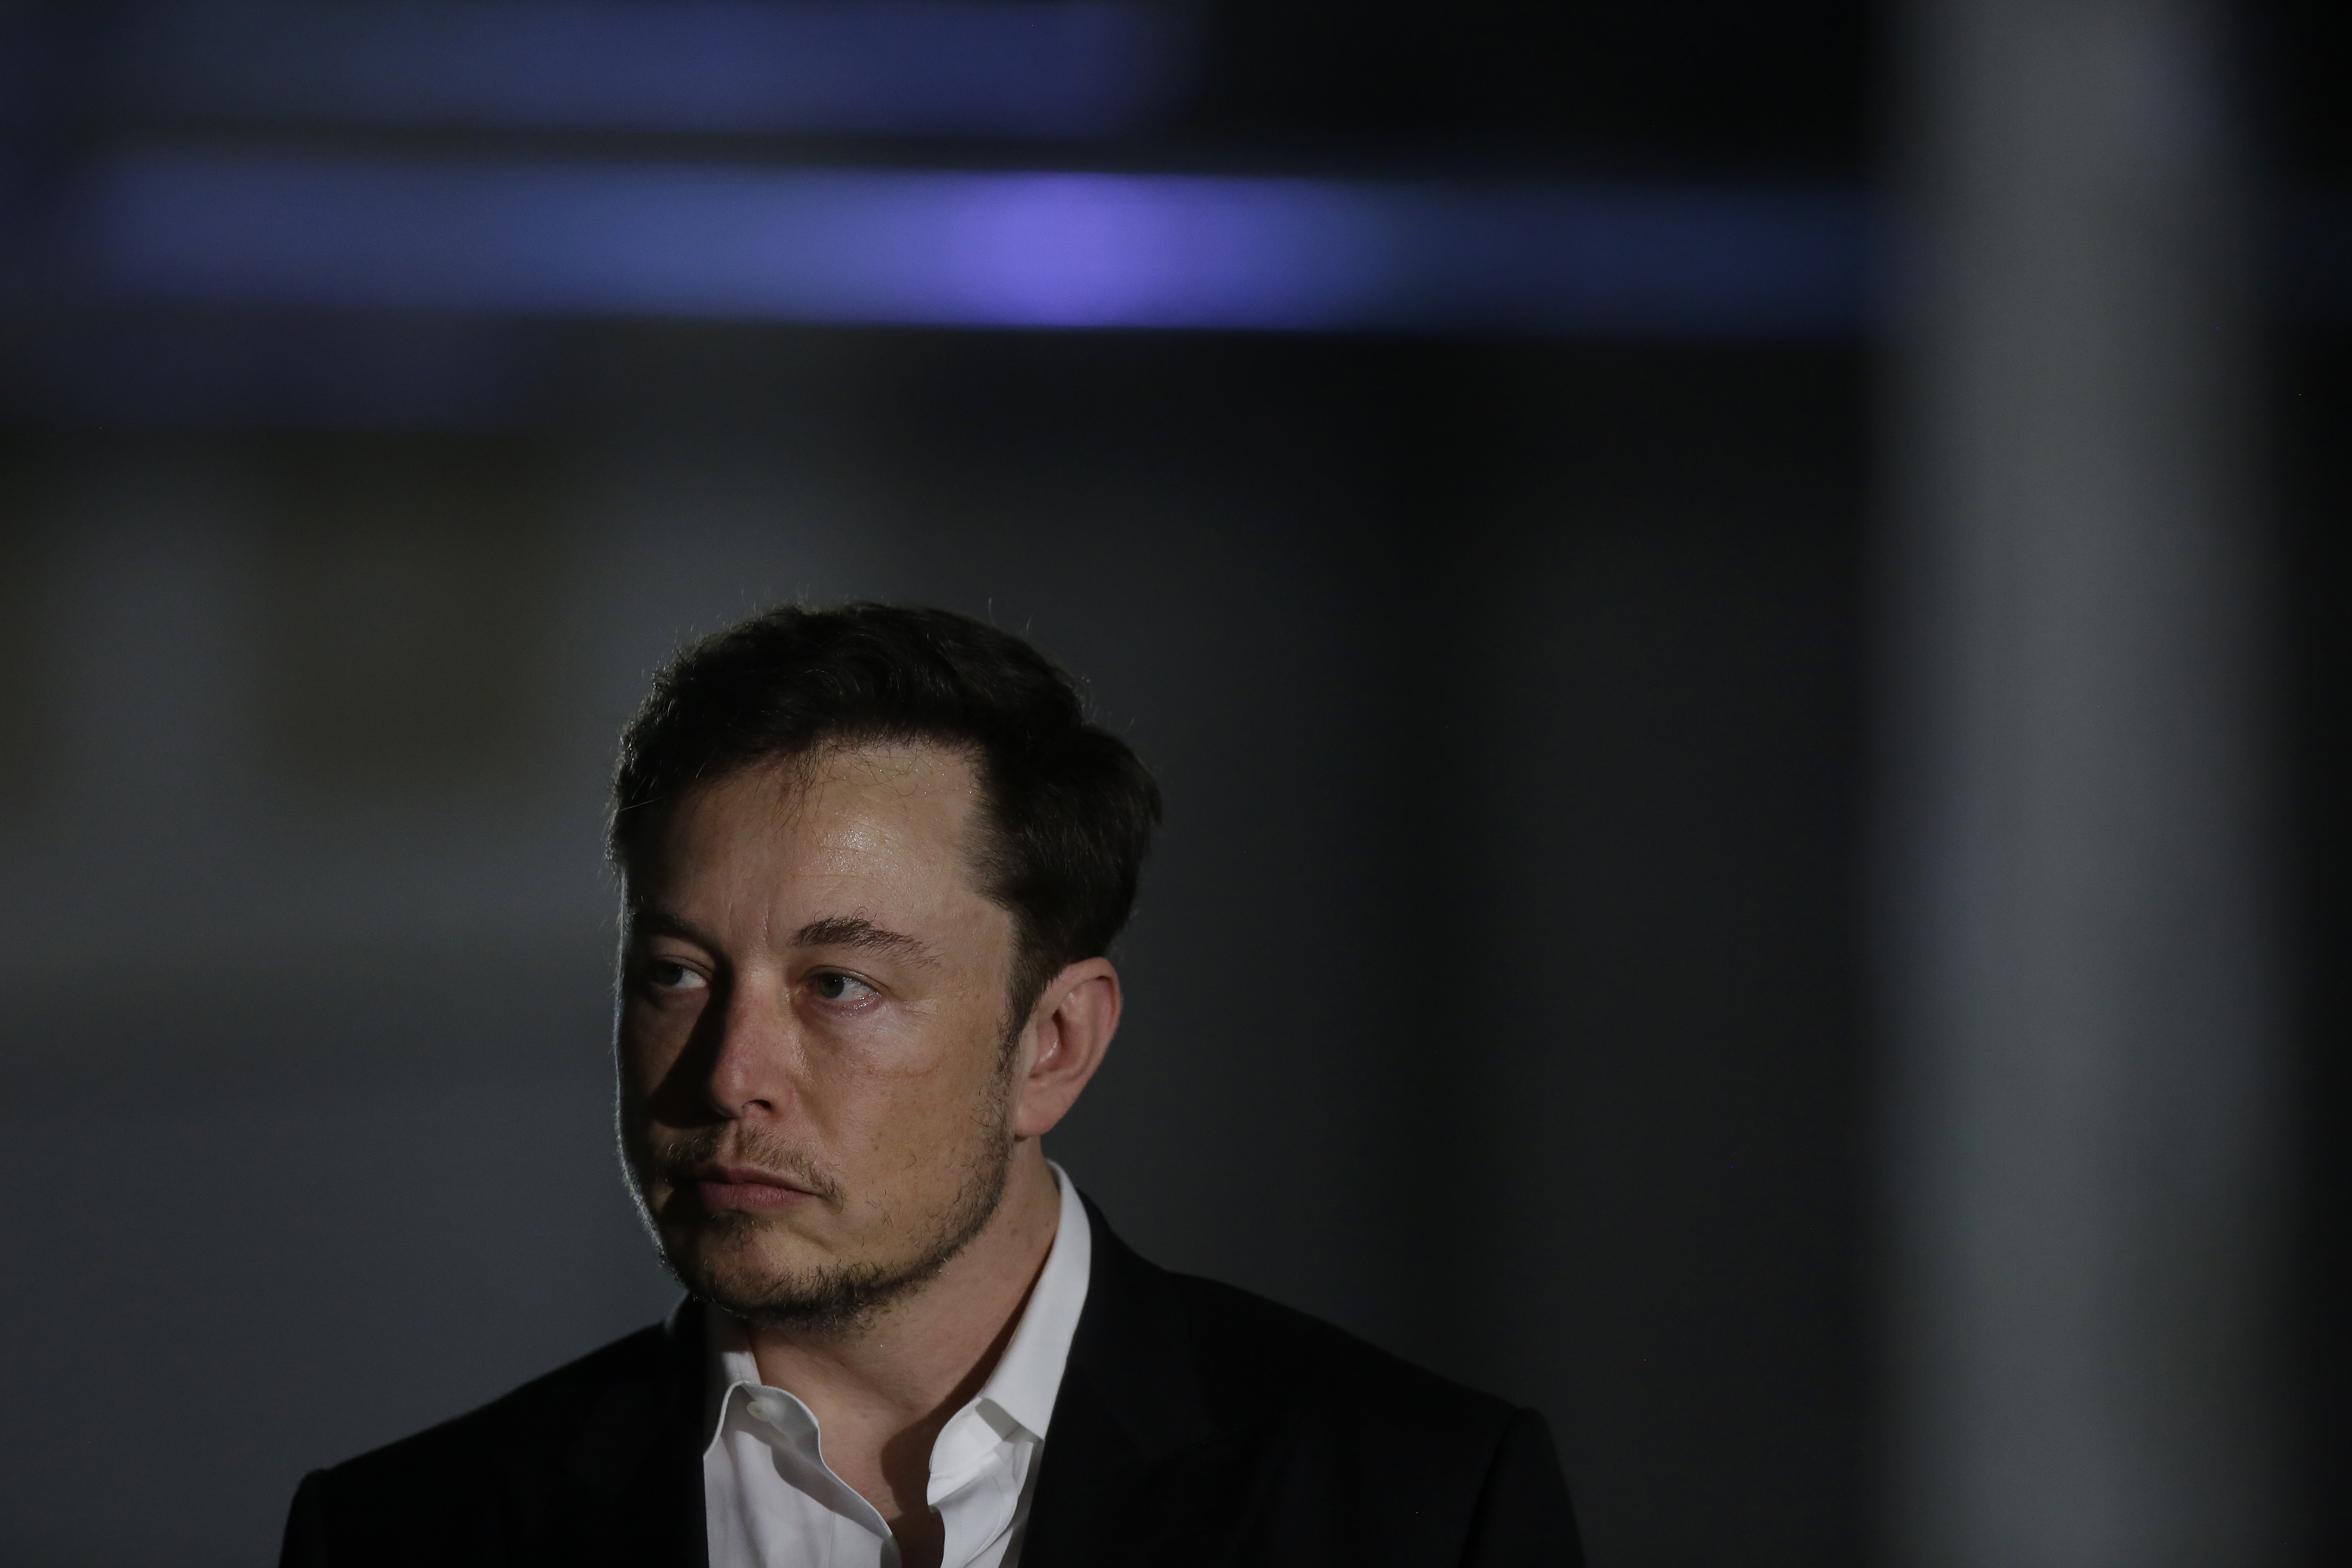 Diver Considering Legal Action Over Elon Musk 'Pedo' Tweet